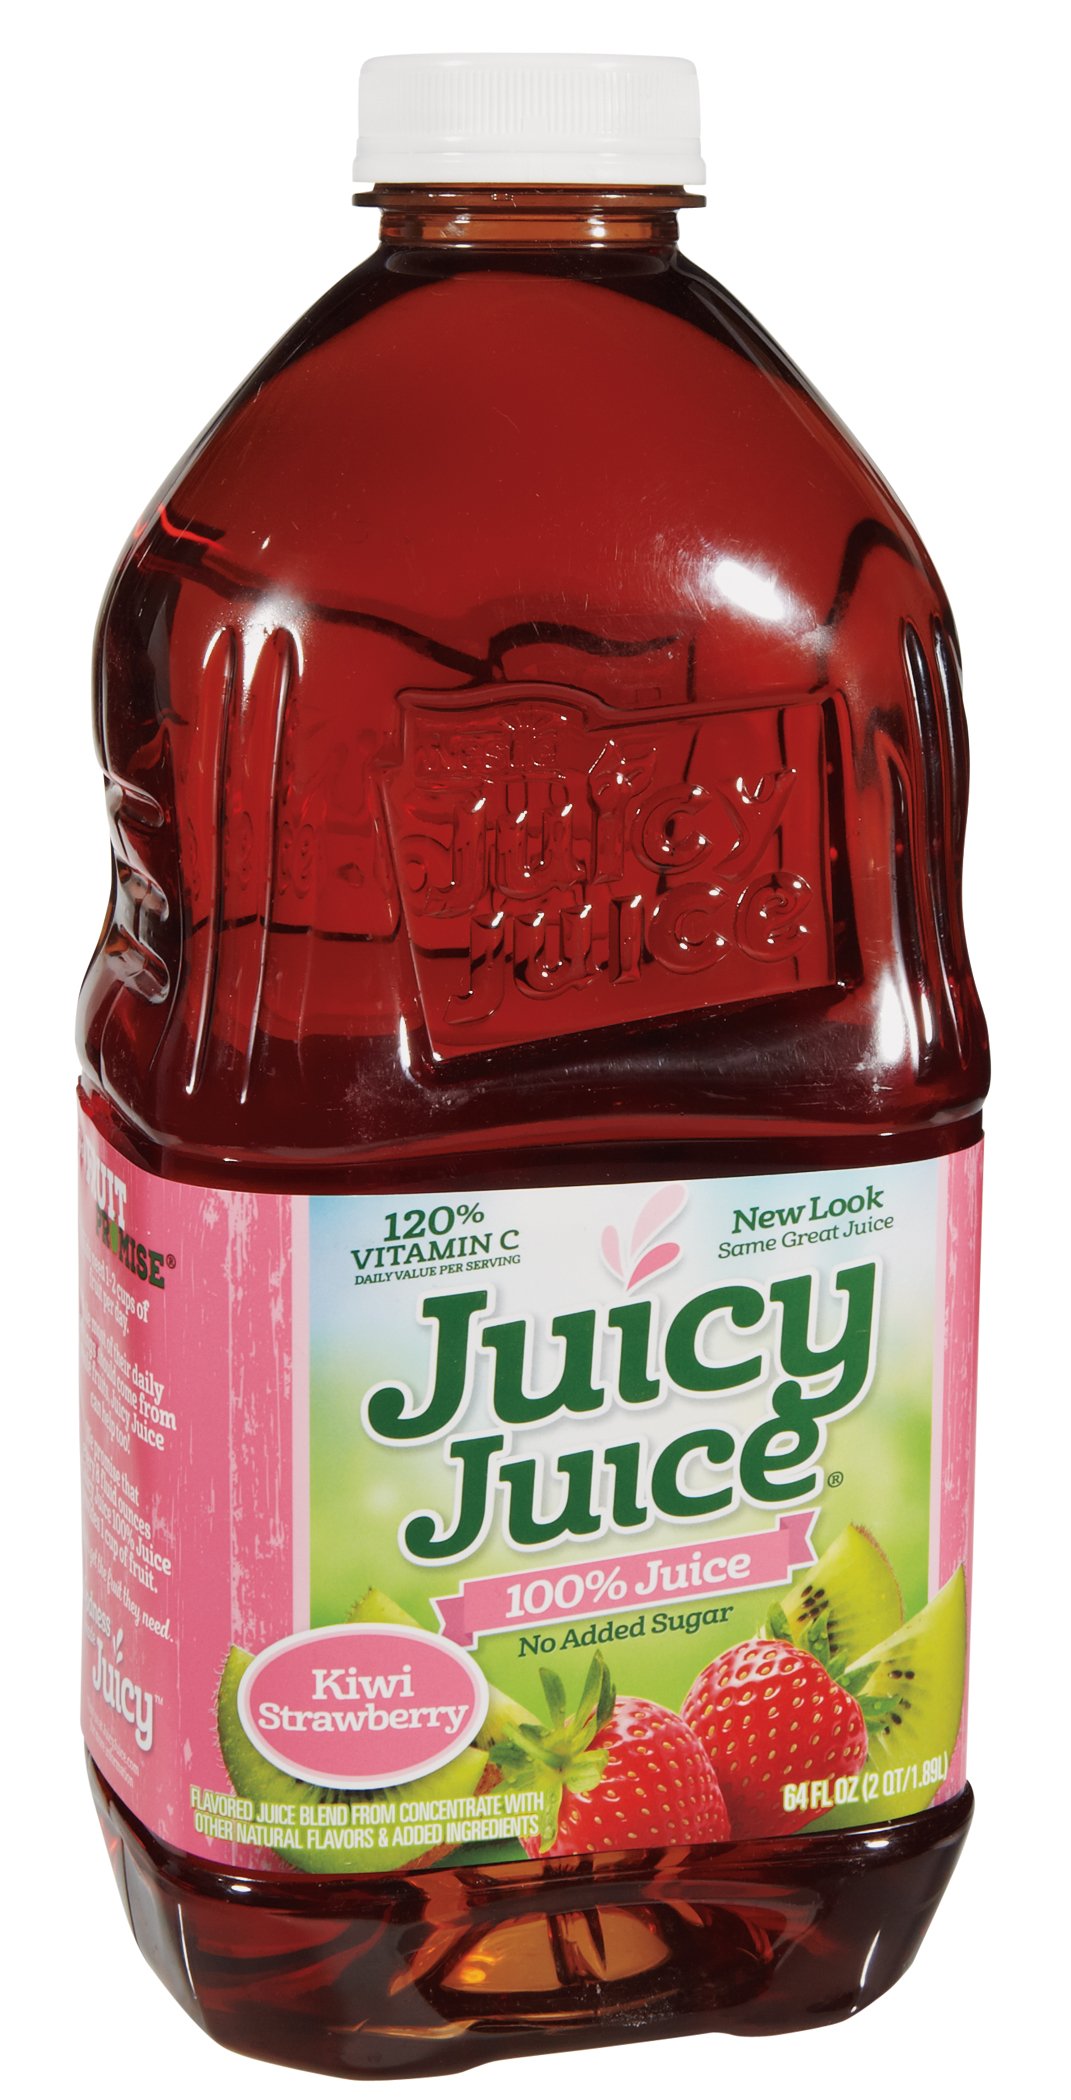 Juicy Juice 100% Kiwi Strawberry Juice Blend - Shop Juice at H-E-B